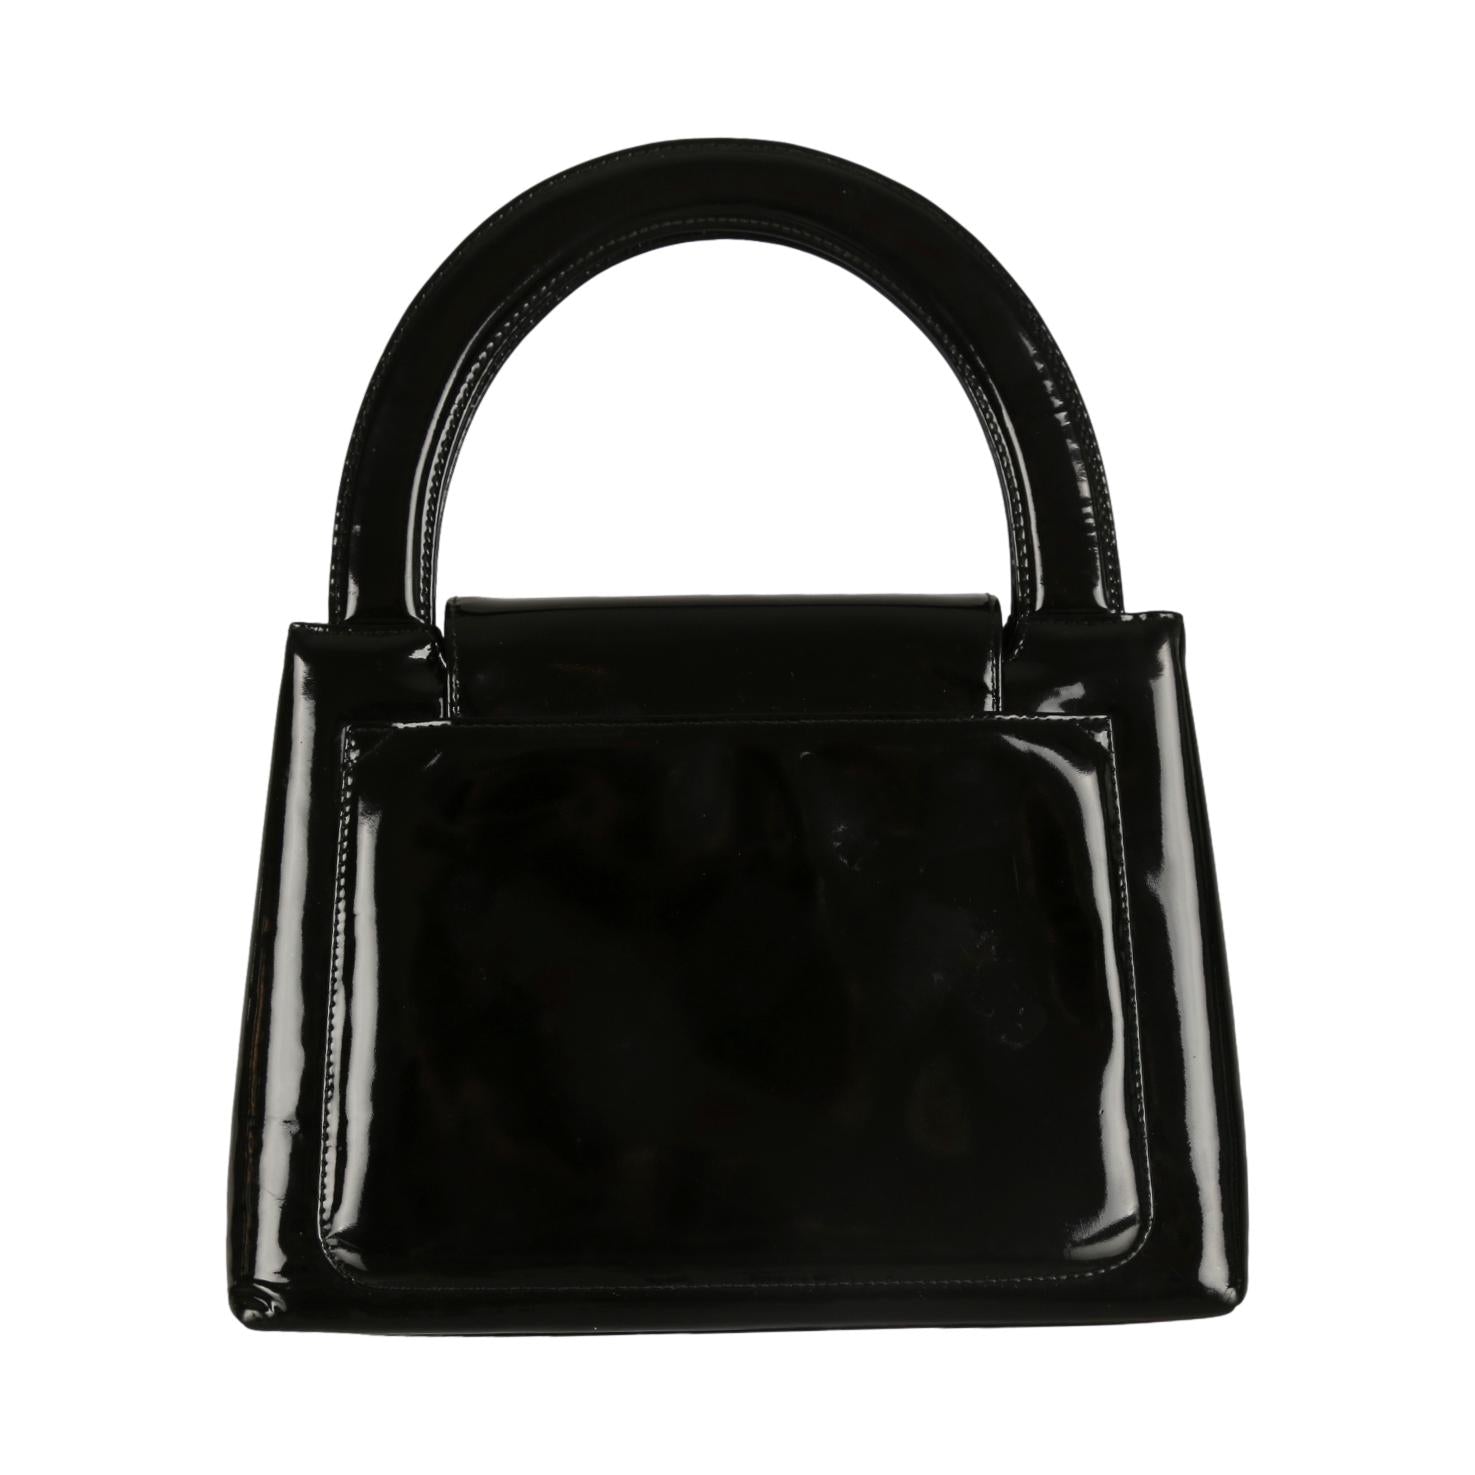 Chanel Black Patent Top Handle Bag